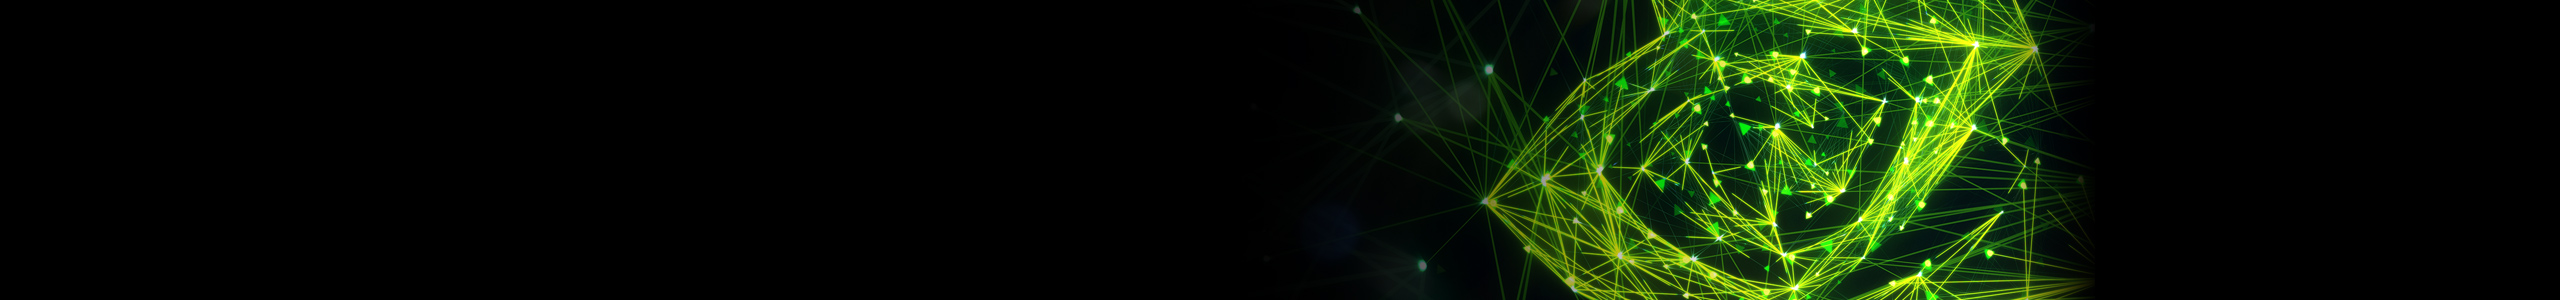 nvidia-partner-network-home-page-banner-2560-ud image